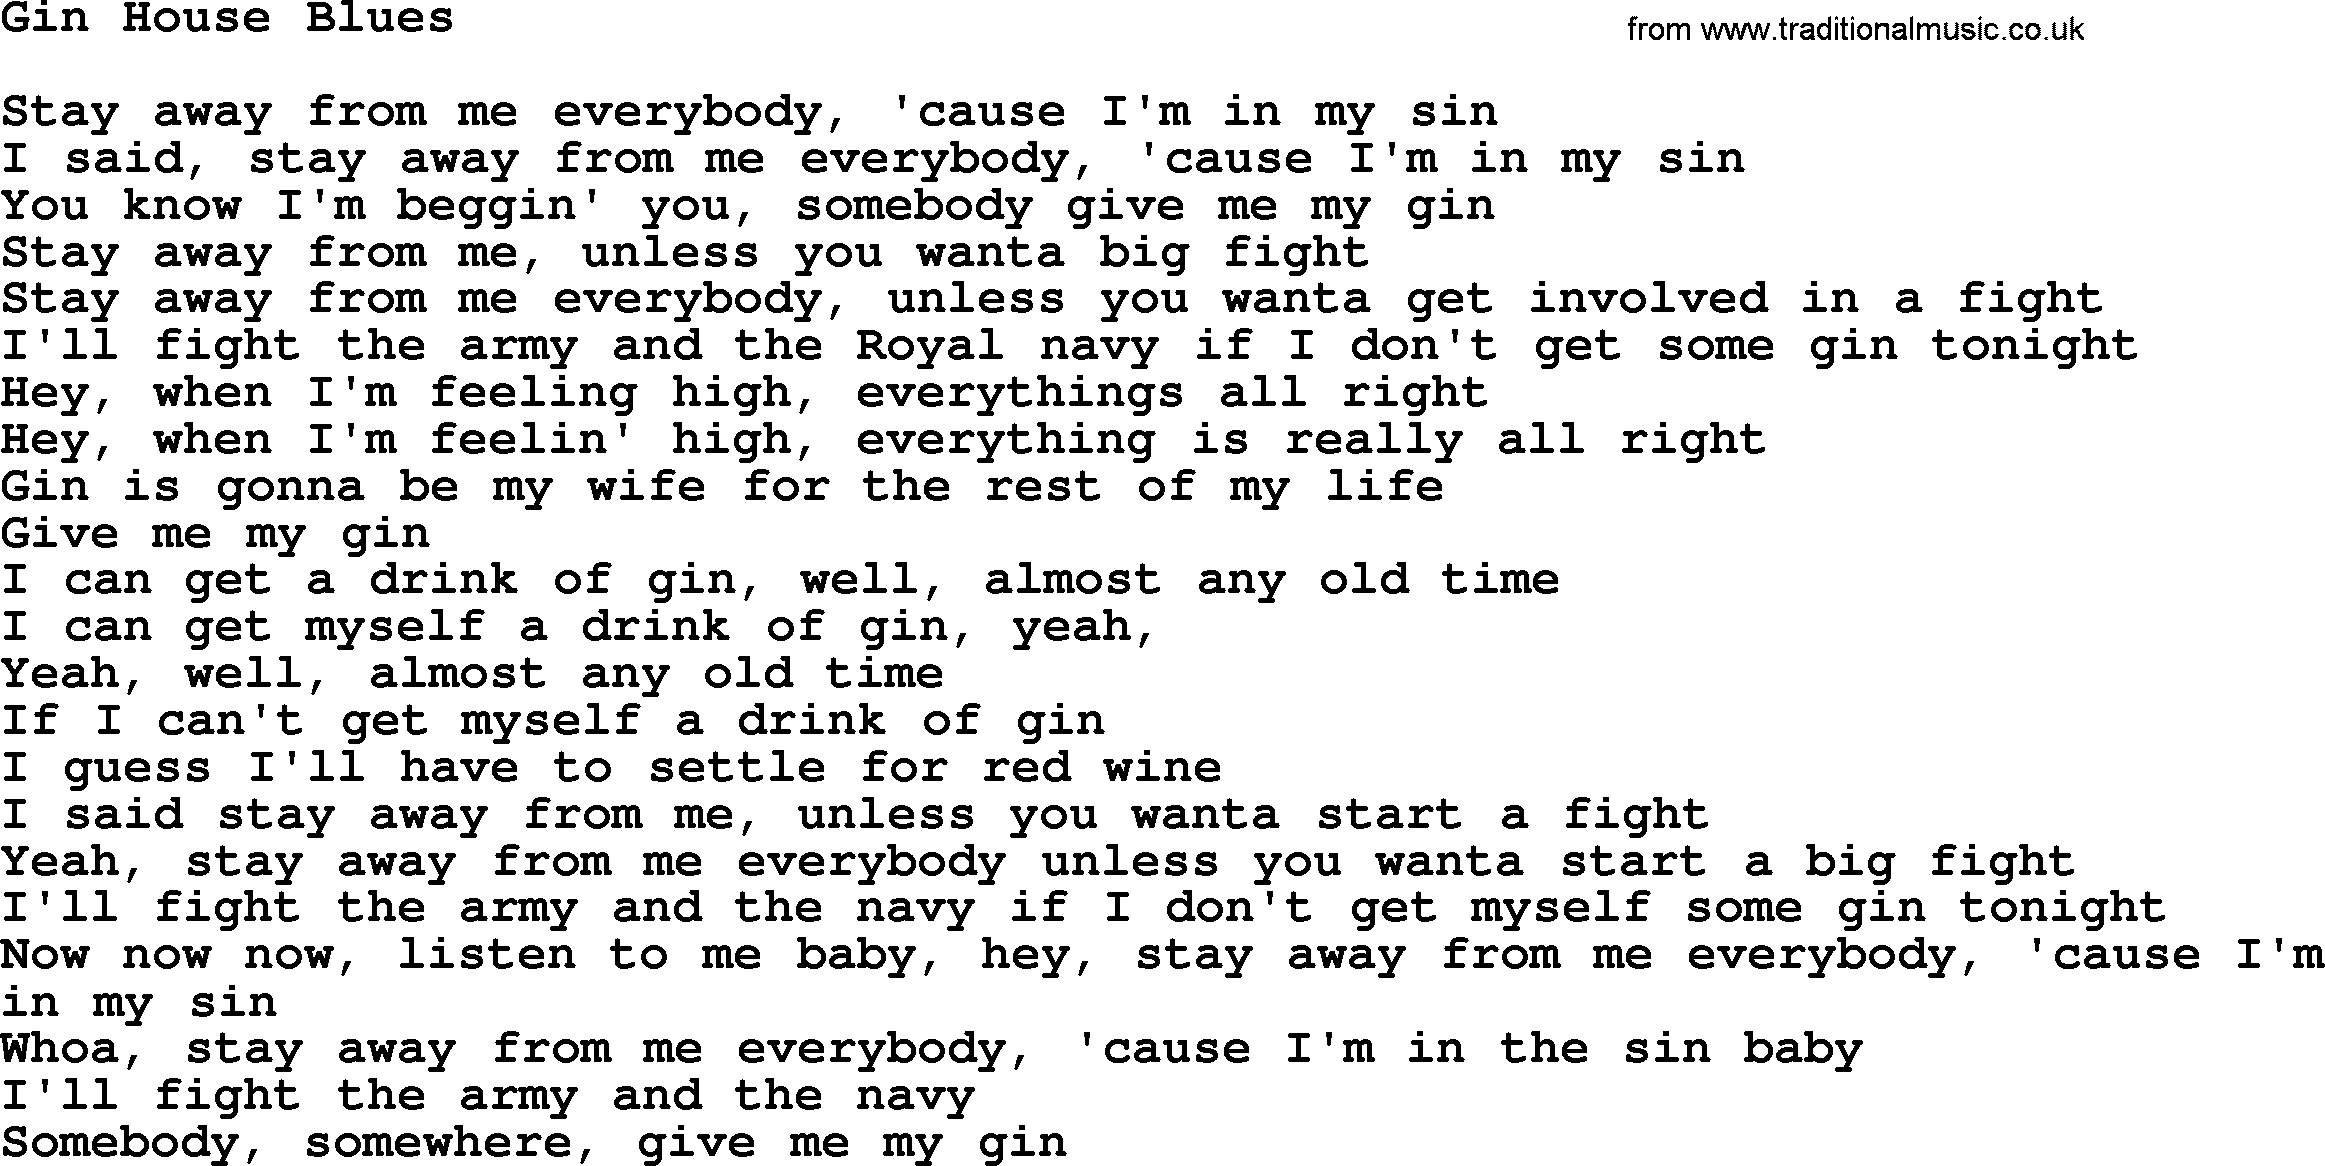 The Byrds song Gin House Blues, lyrics